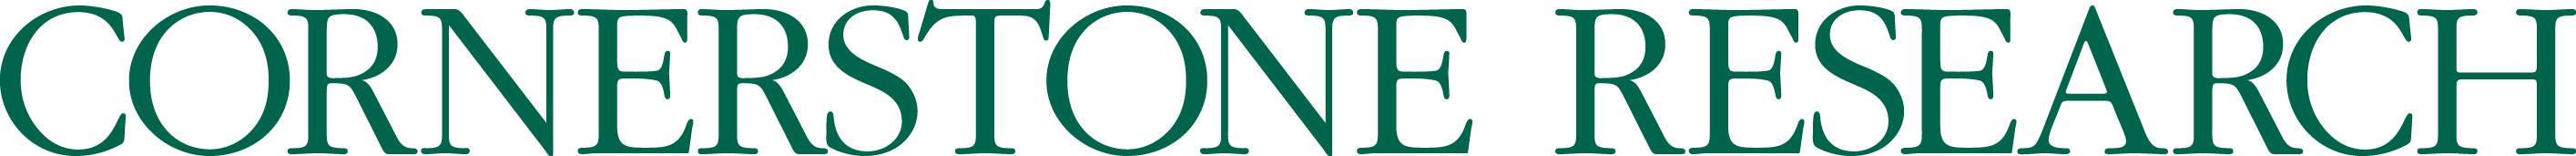 Cornerstone Research Logo